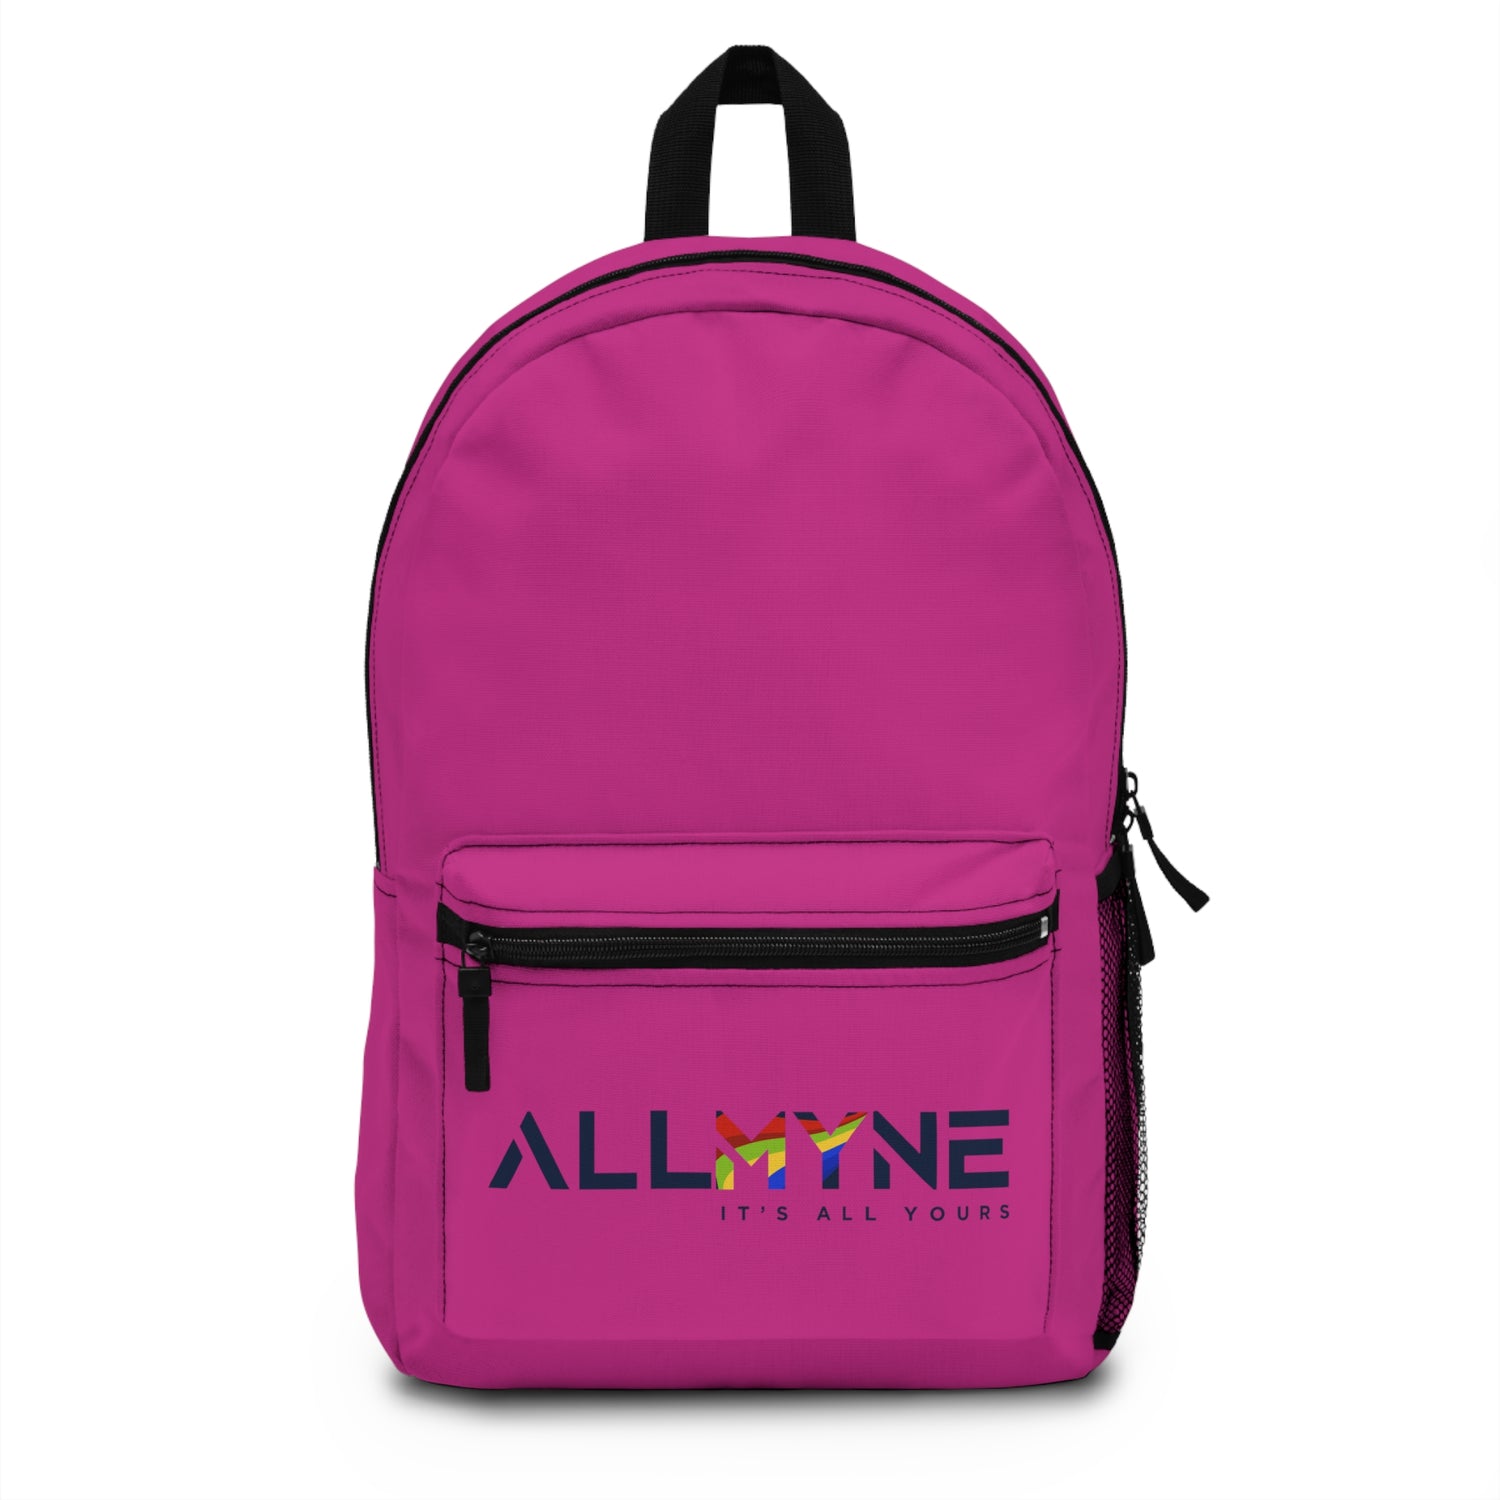 ALLMYNE Backpack (Pink)